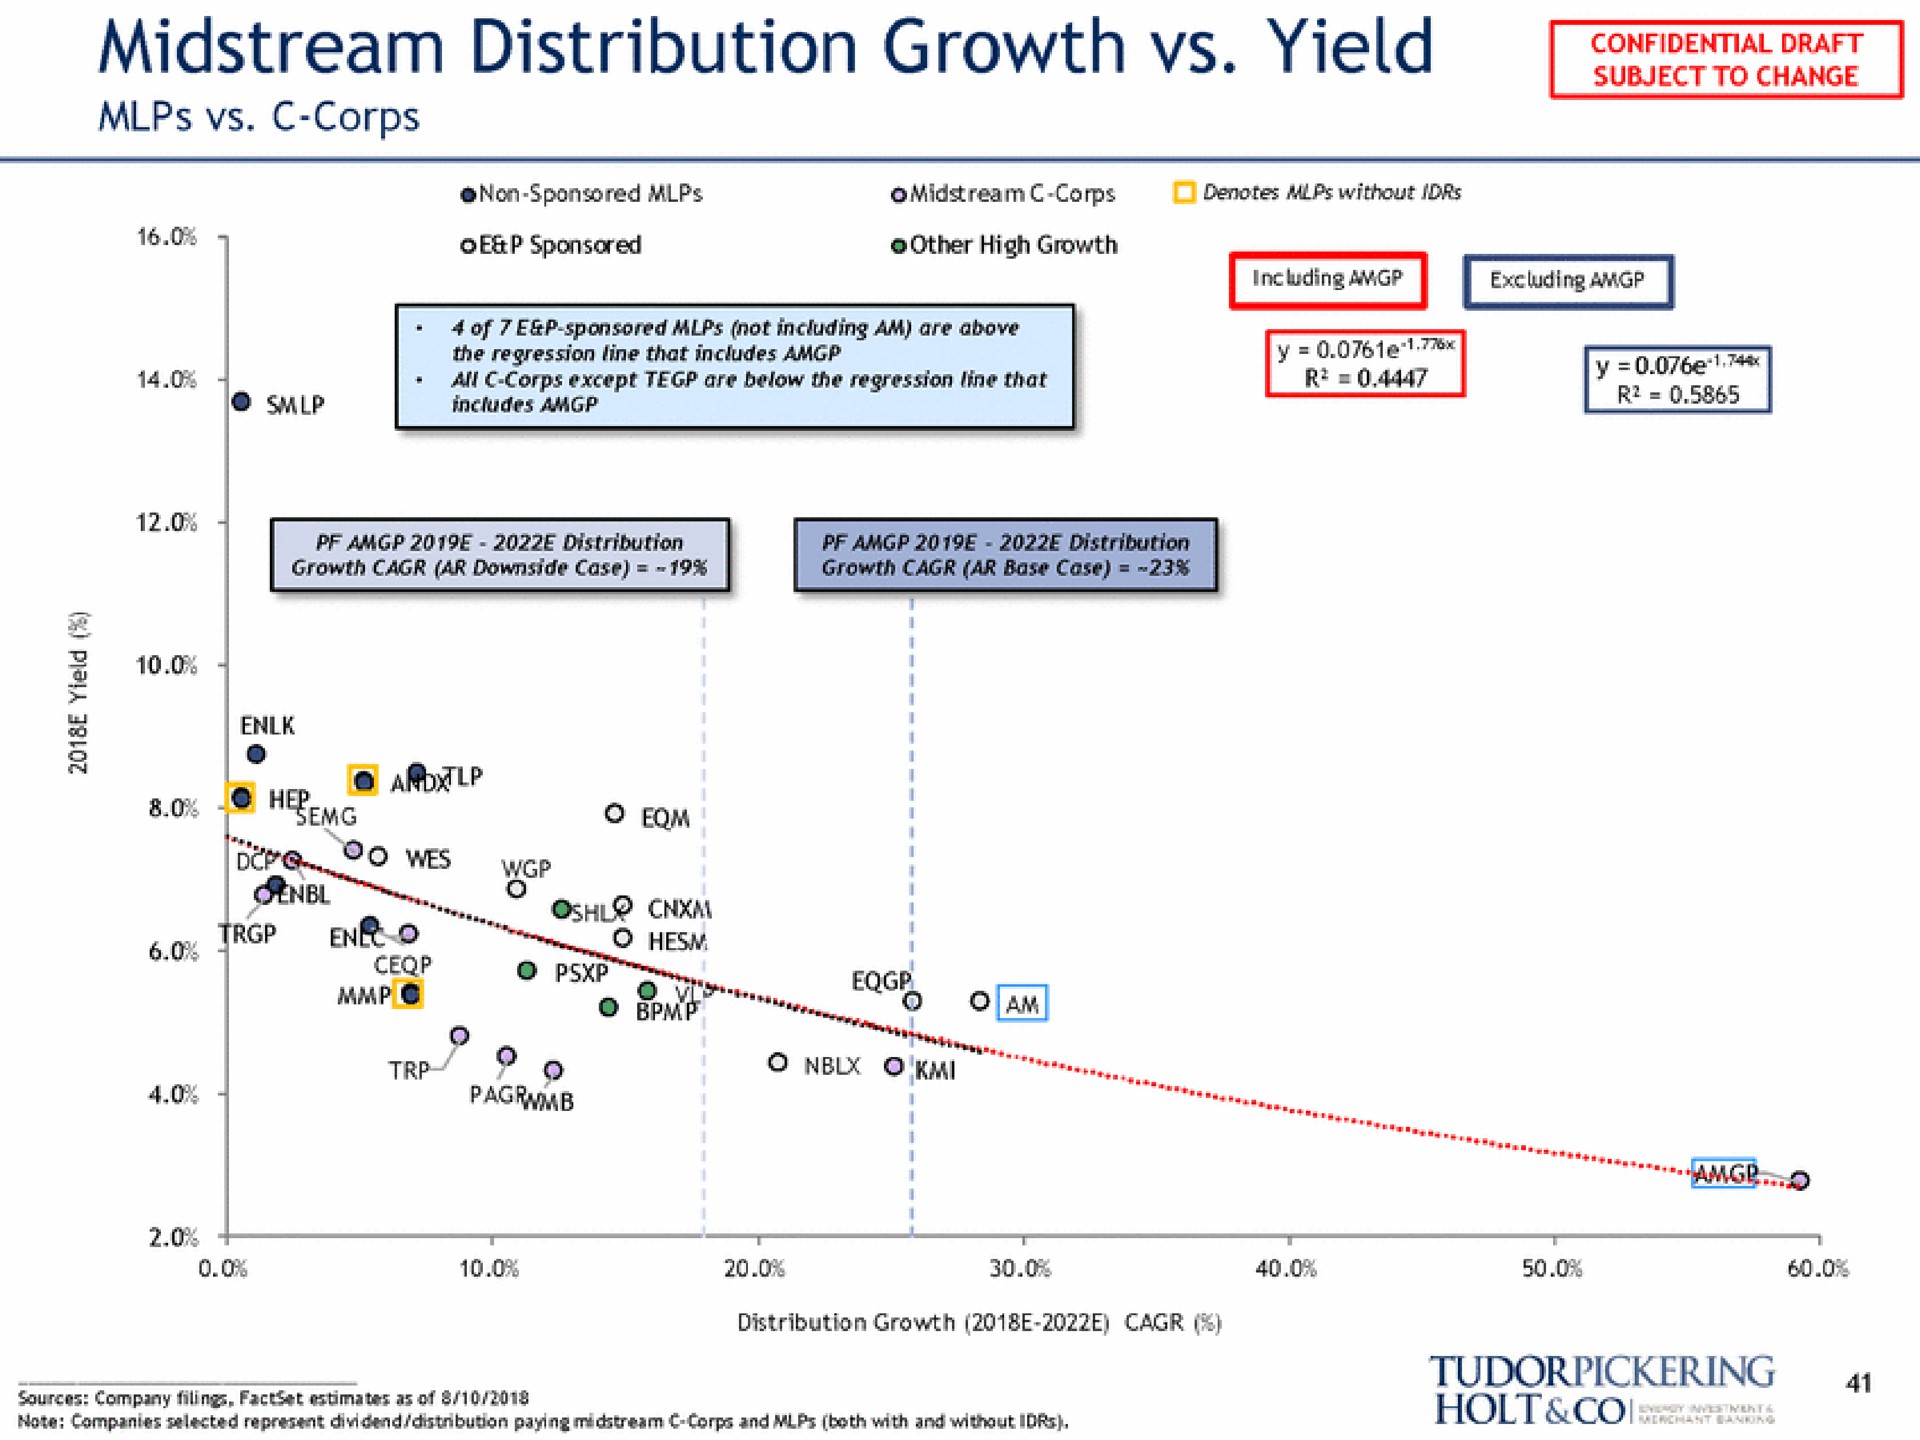 midstream distribution growth yield | Tudor, Pickering, Holt & Co